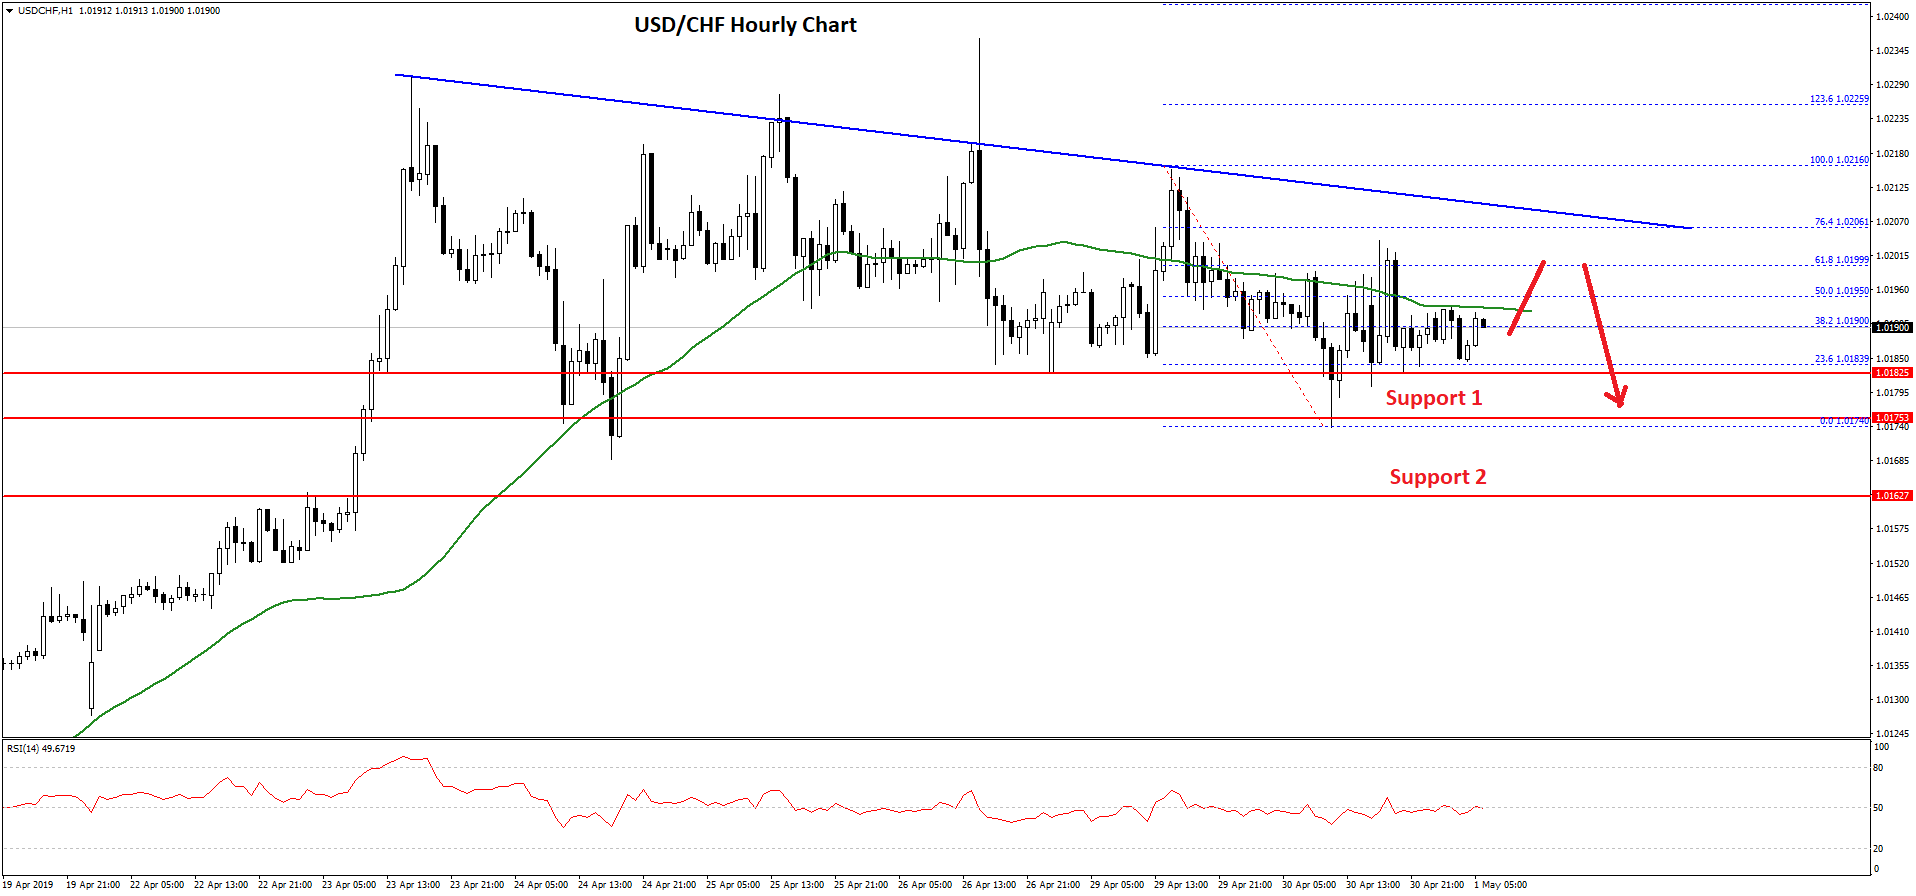 USD/CHF Technical Analysis US Dollar Chart